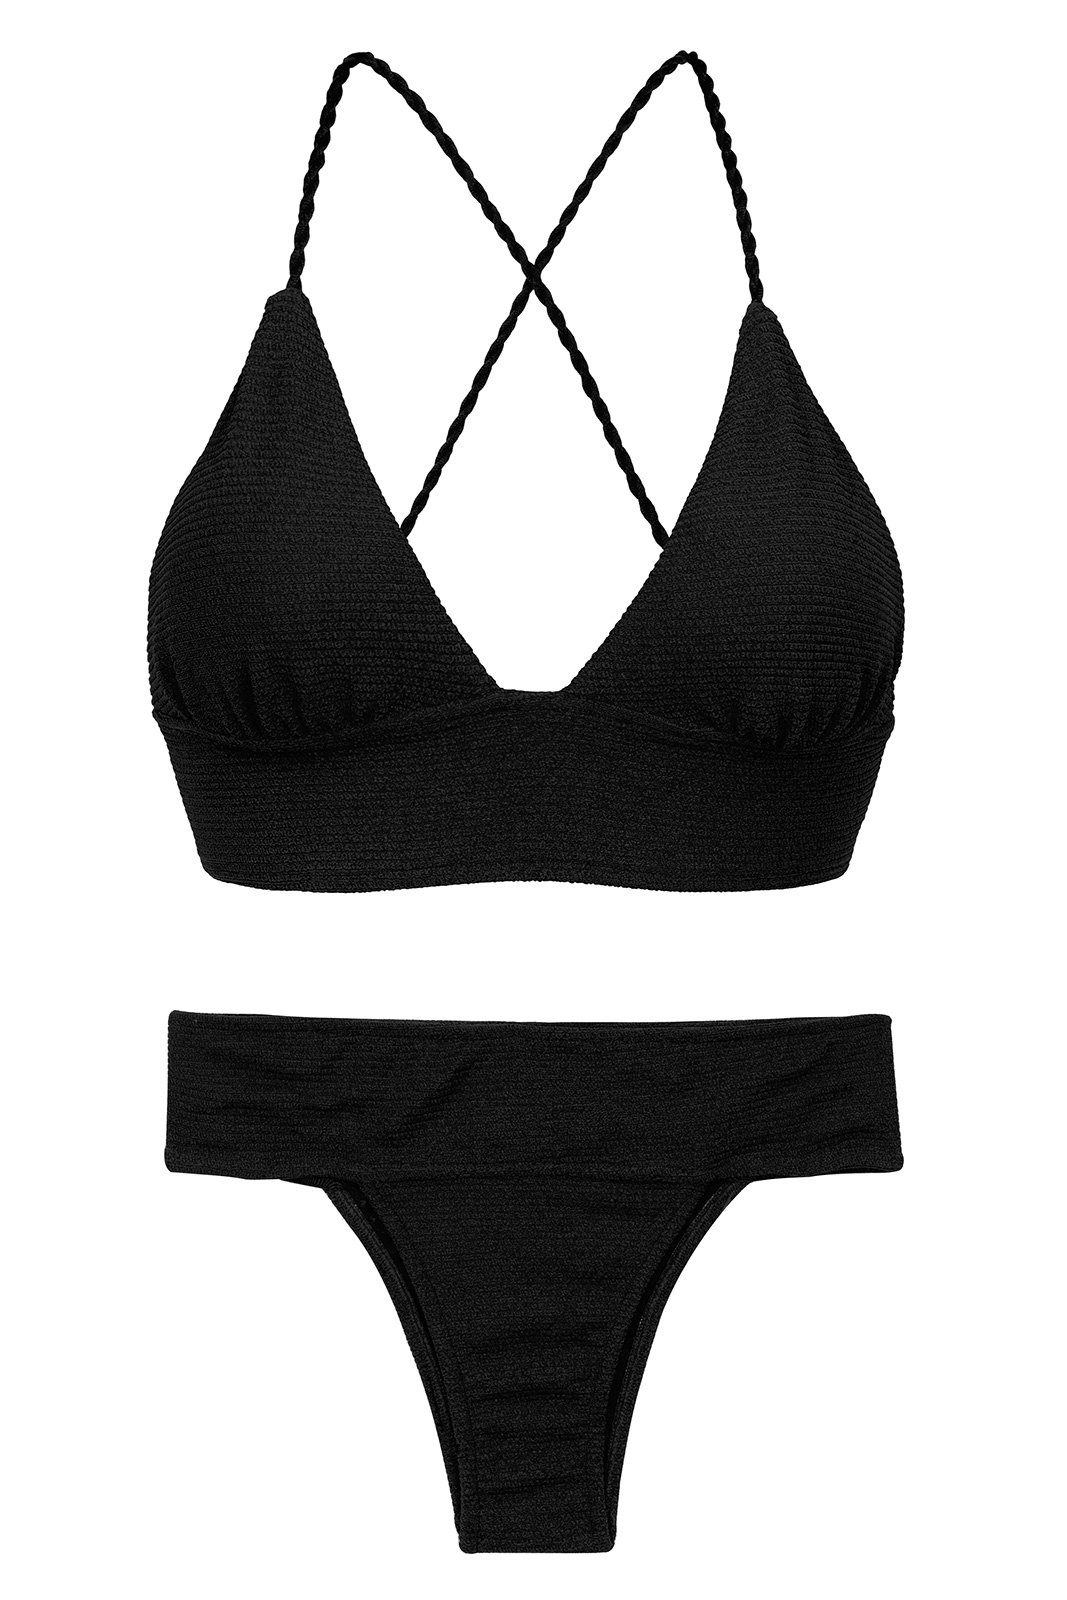 Textured Black Crossed Bralette Bikini Set St Tropez Black Tri Cos